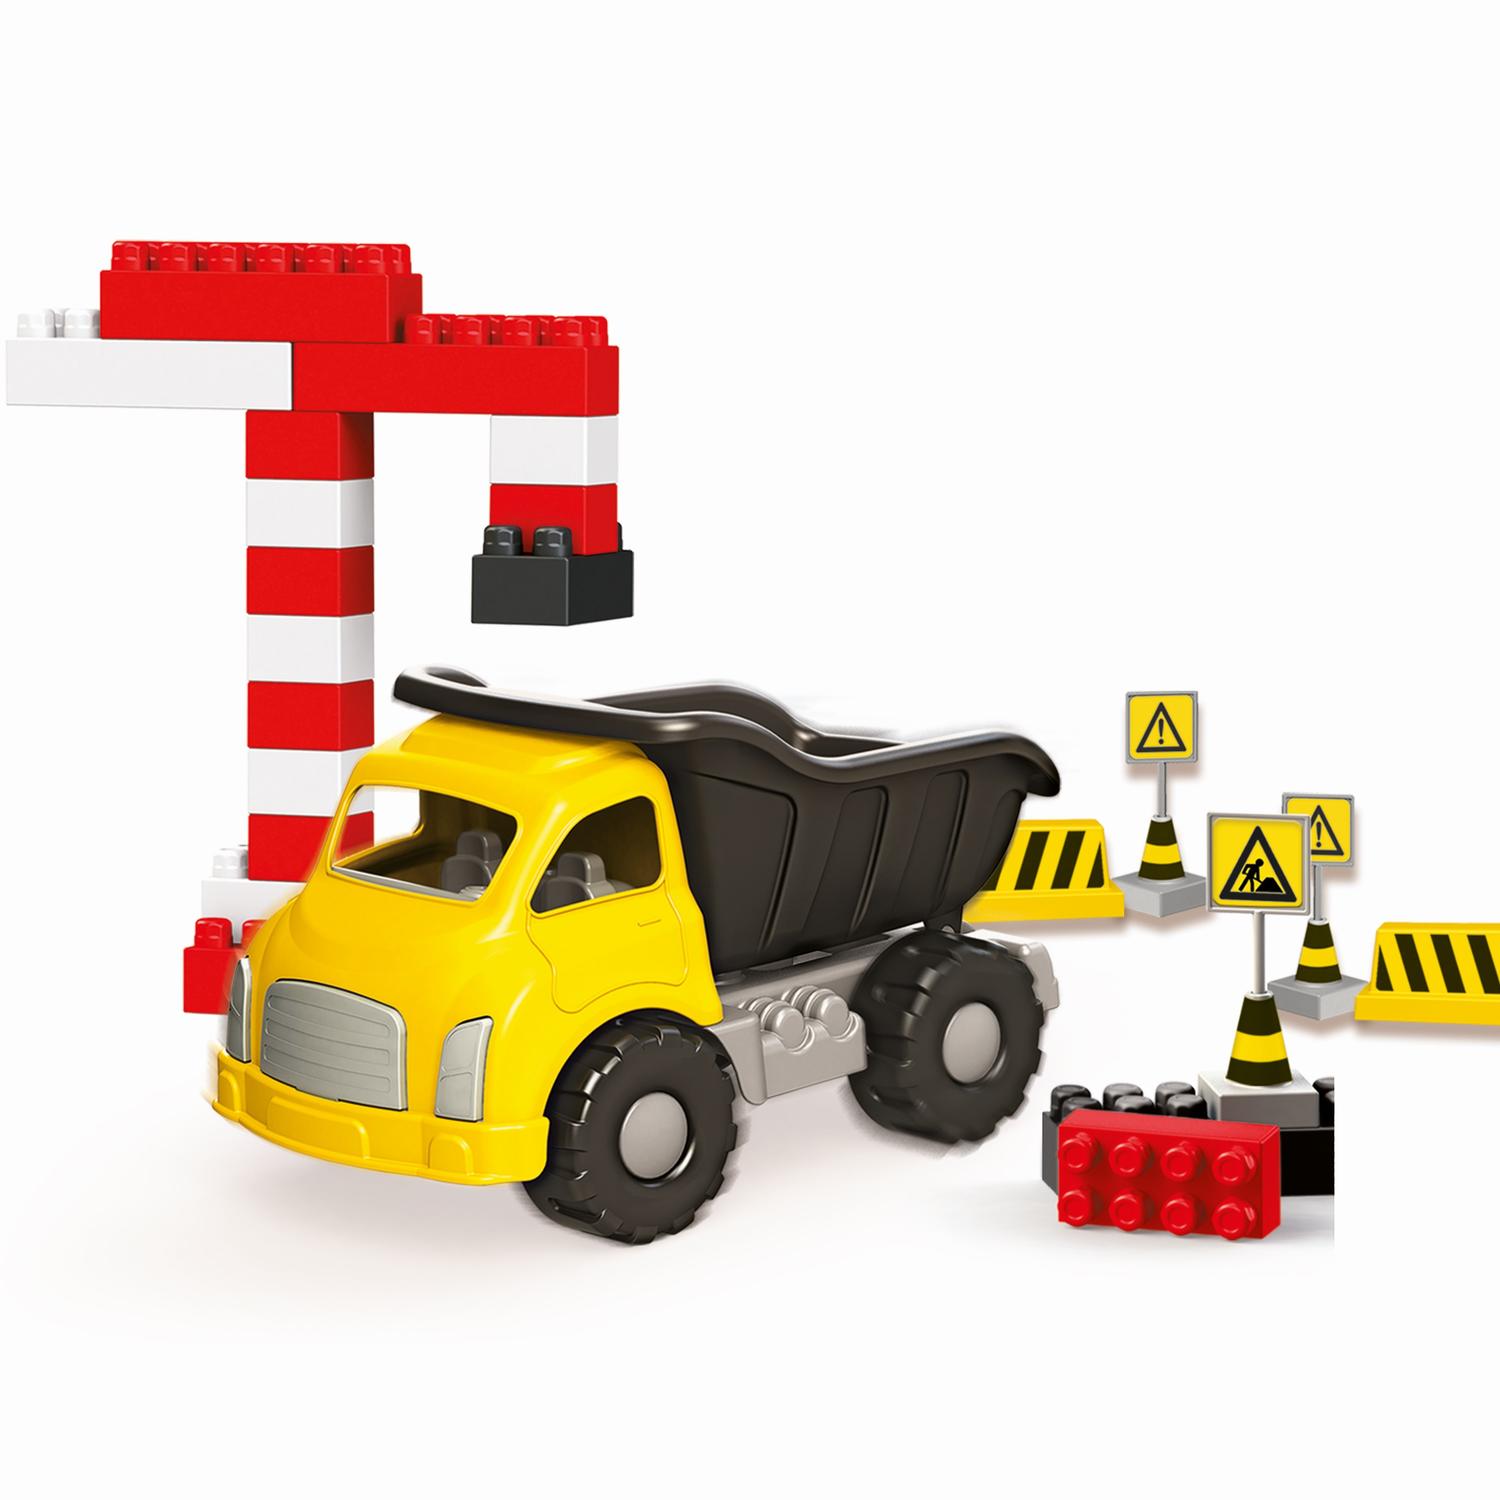 Camion si cuburi de construit - 40 piese PlayLearn Toys